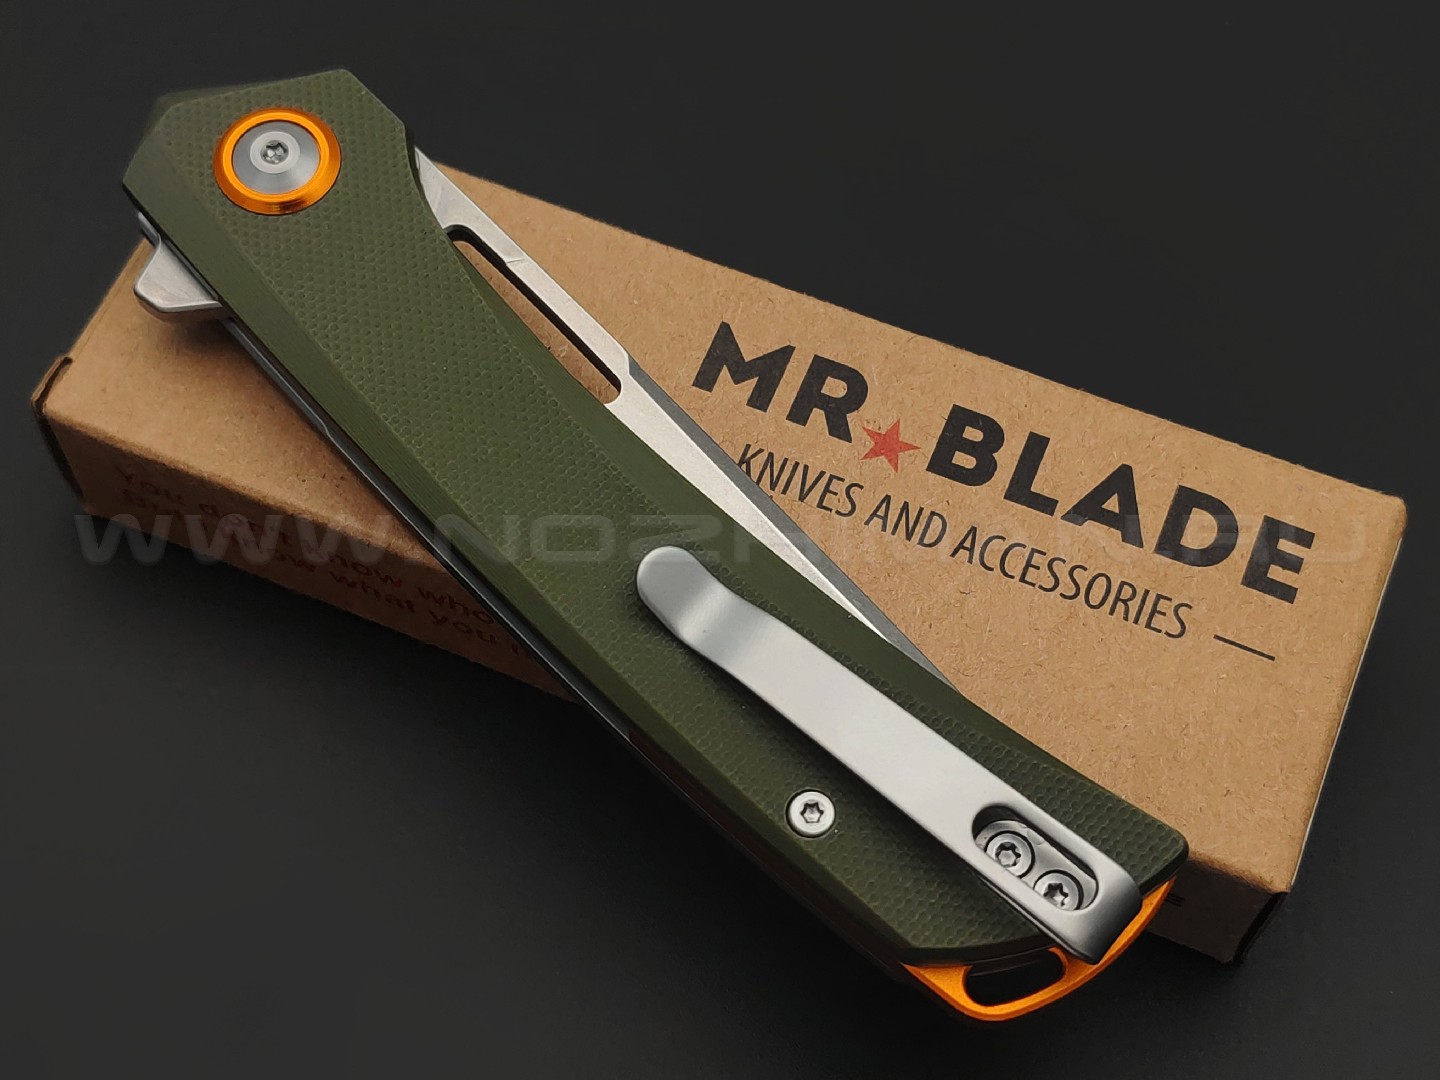 Mr.Blade складной нож Finch сталь Aus-8 sw, рукоять G10 olive